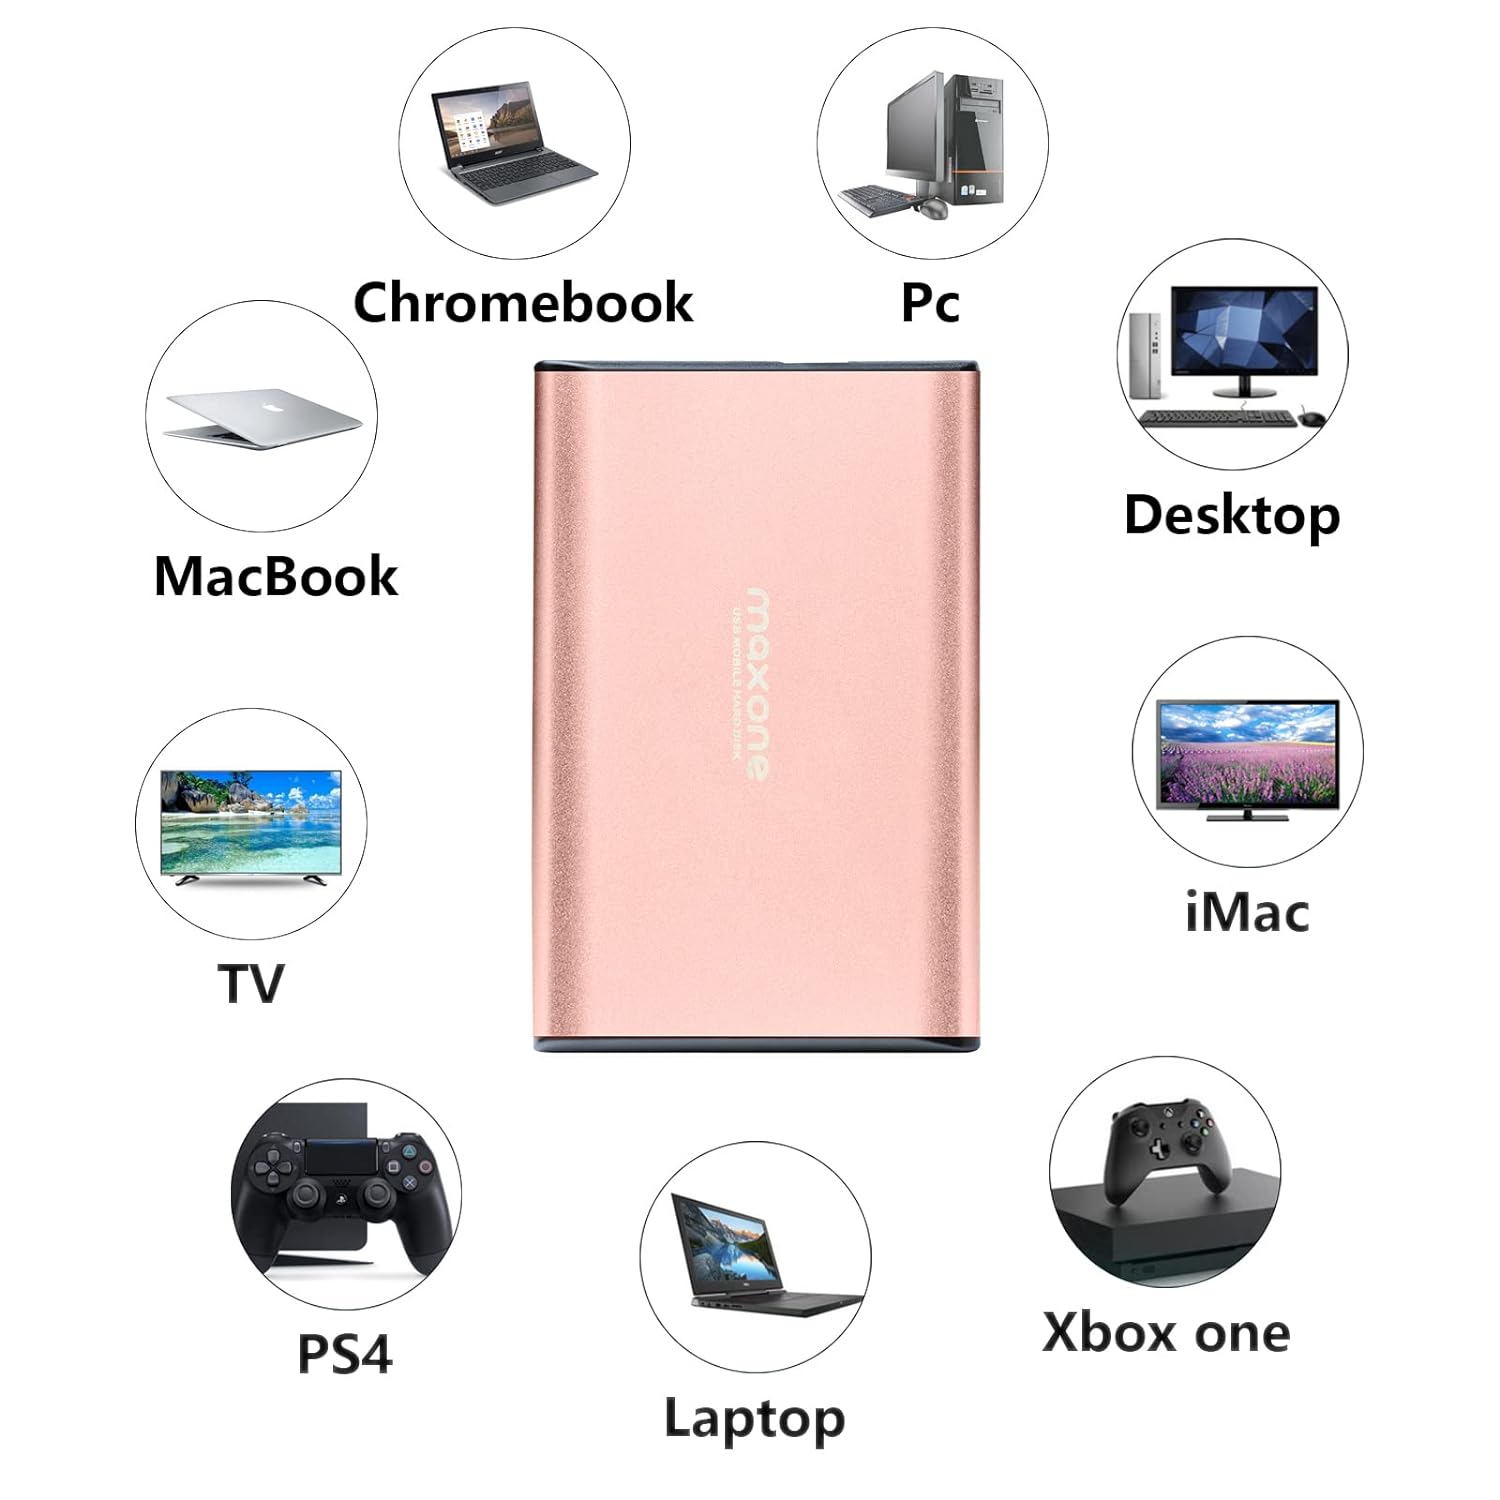 500GB Portable External Hard Drives- 2.5 Inch Ultra Slim External Hard Drives USB 3.0 for Laptop,Desktop,Xbox one,PS4,Mac,Chromebook